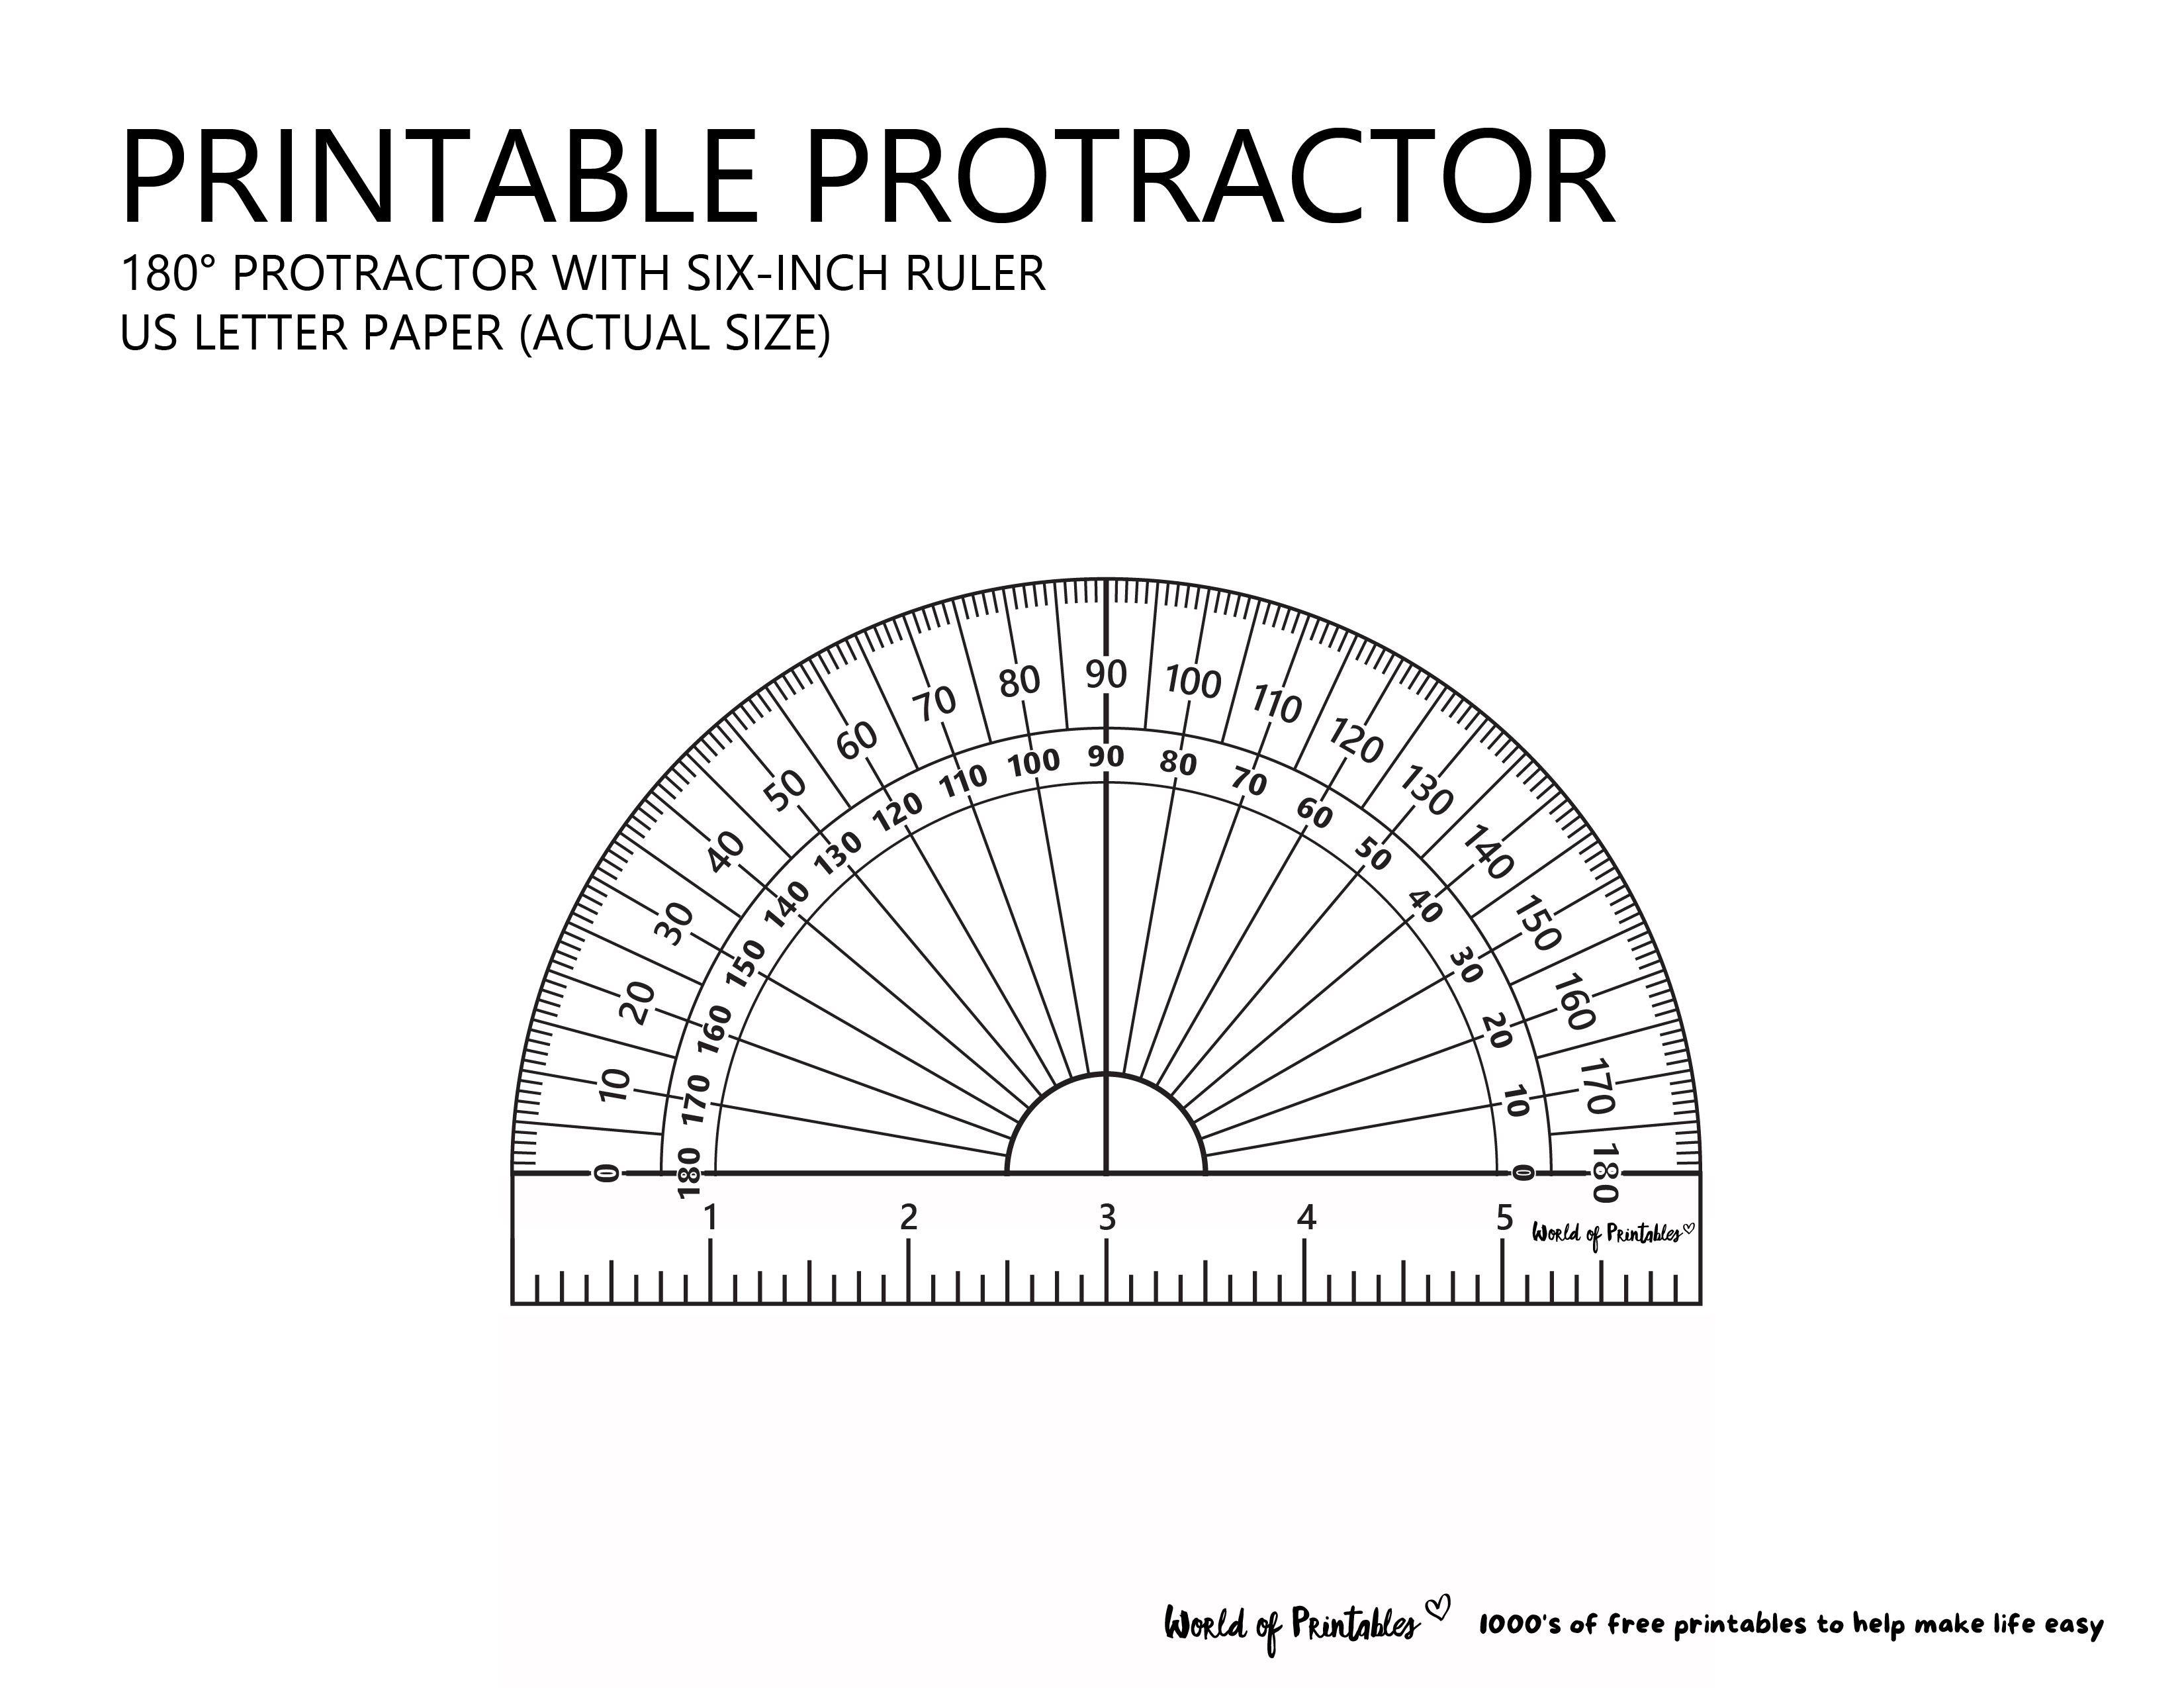 Printable protractor